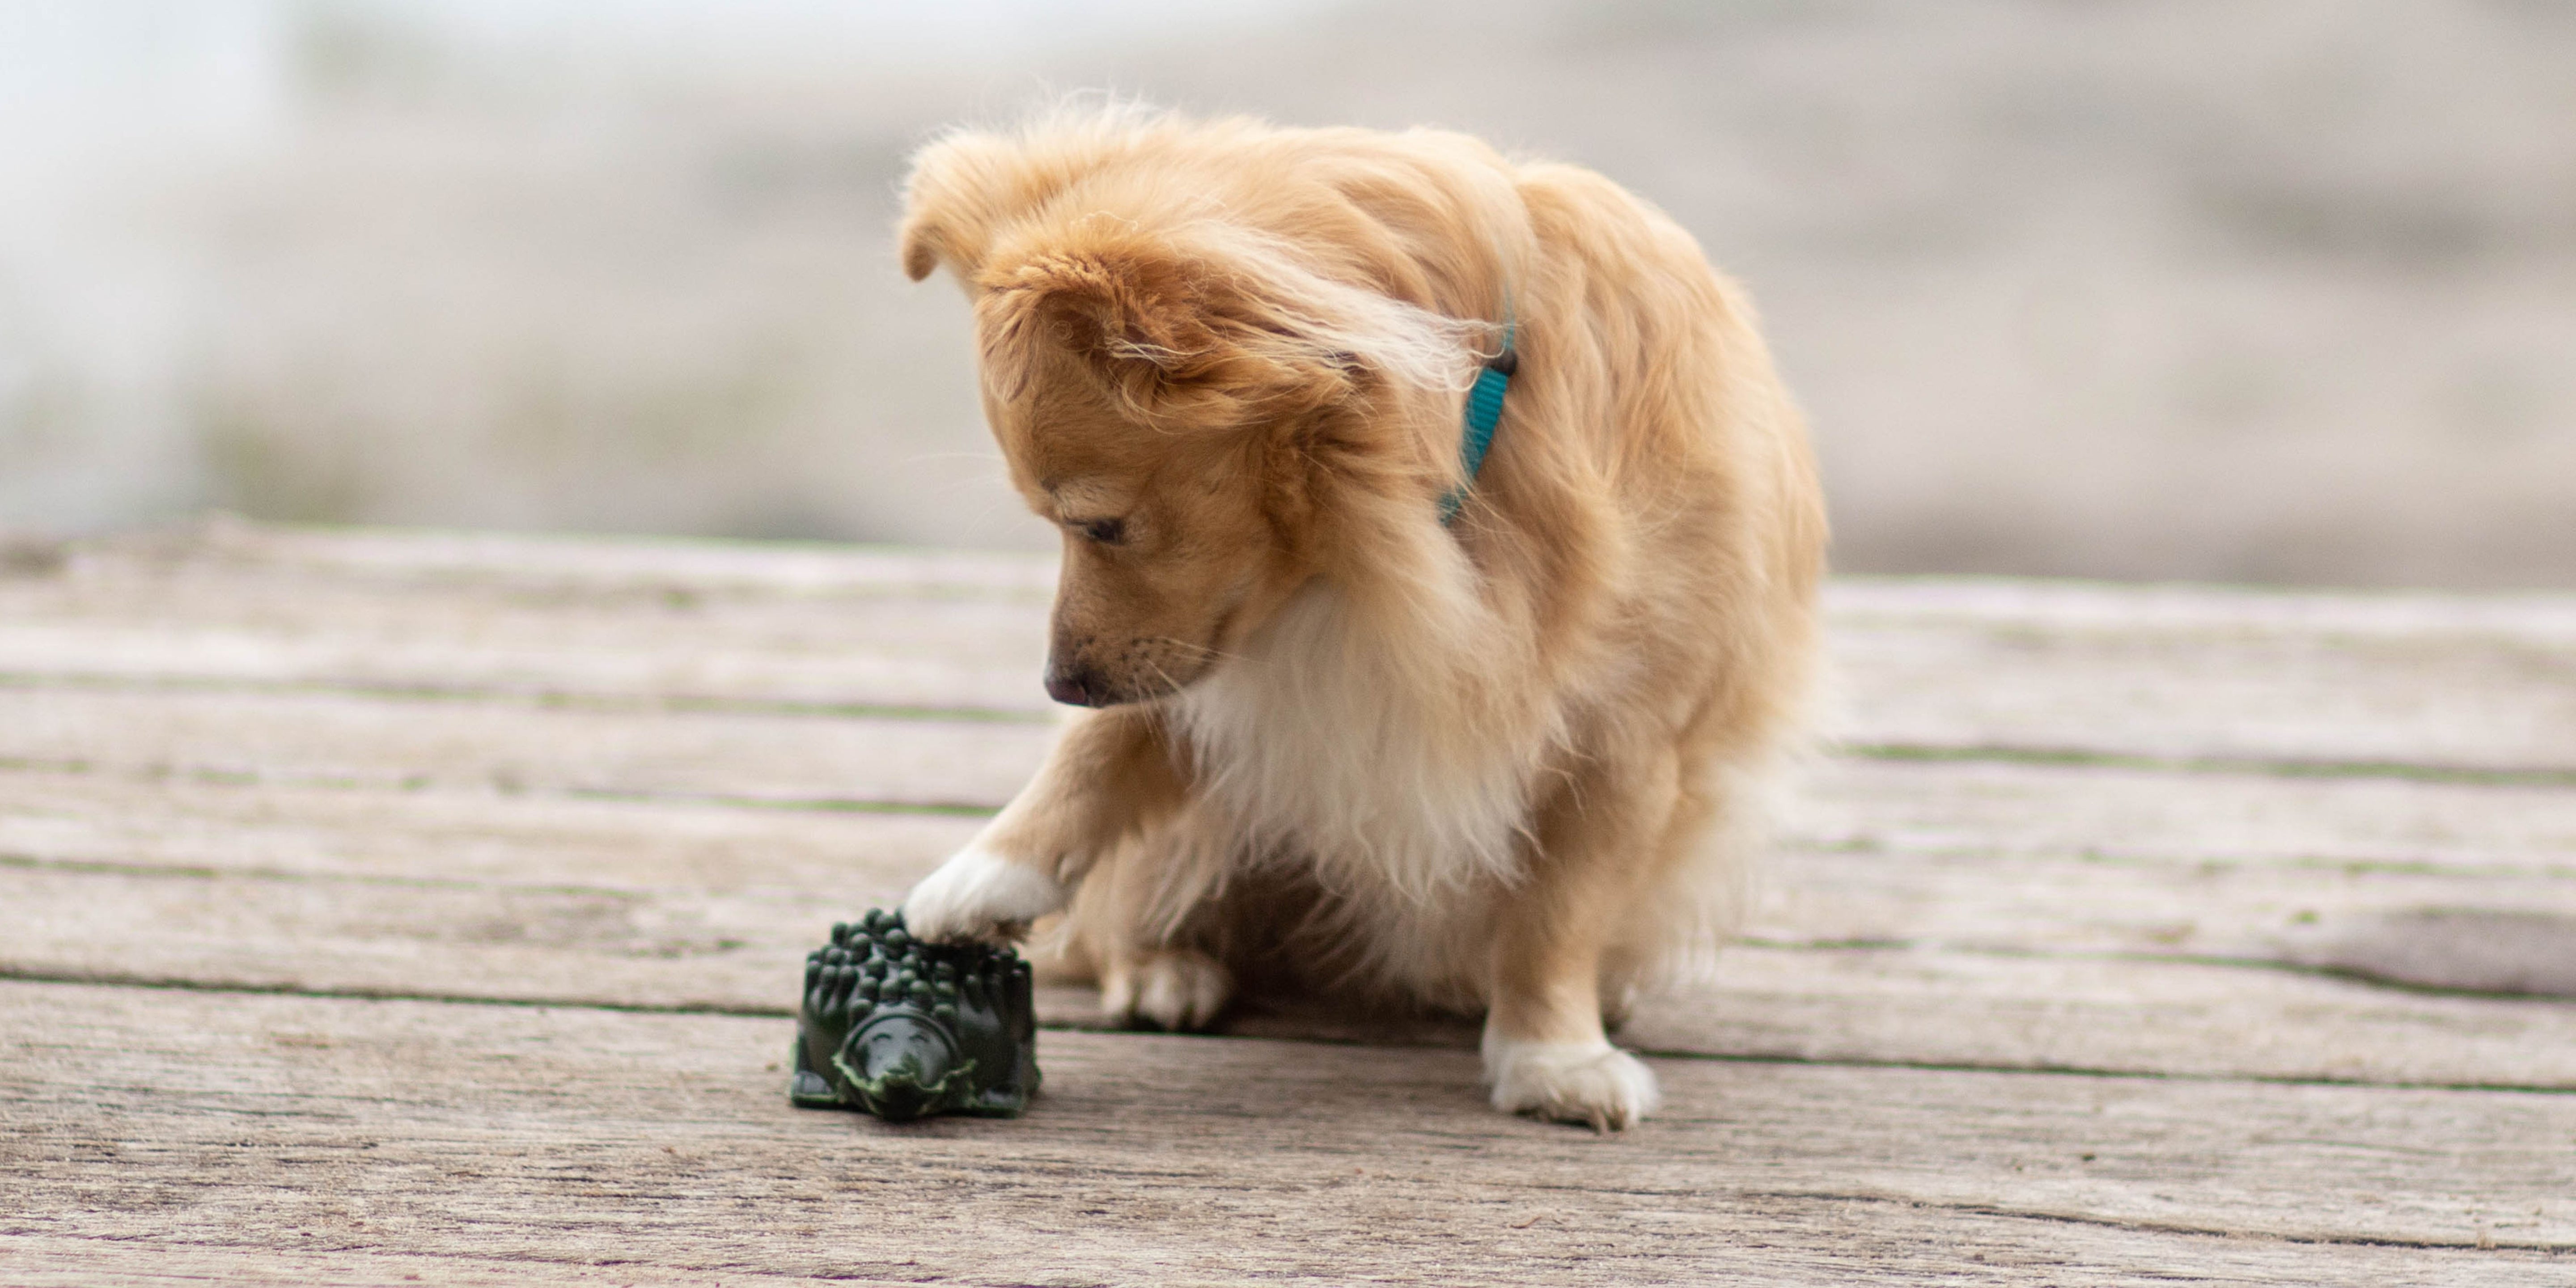 Veganer Onlineshop für Hunde - Fairtails vegane Hundeleckerli, Kauartikel Hund